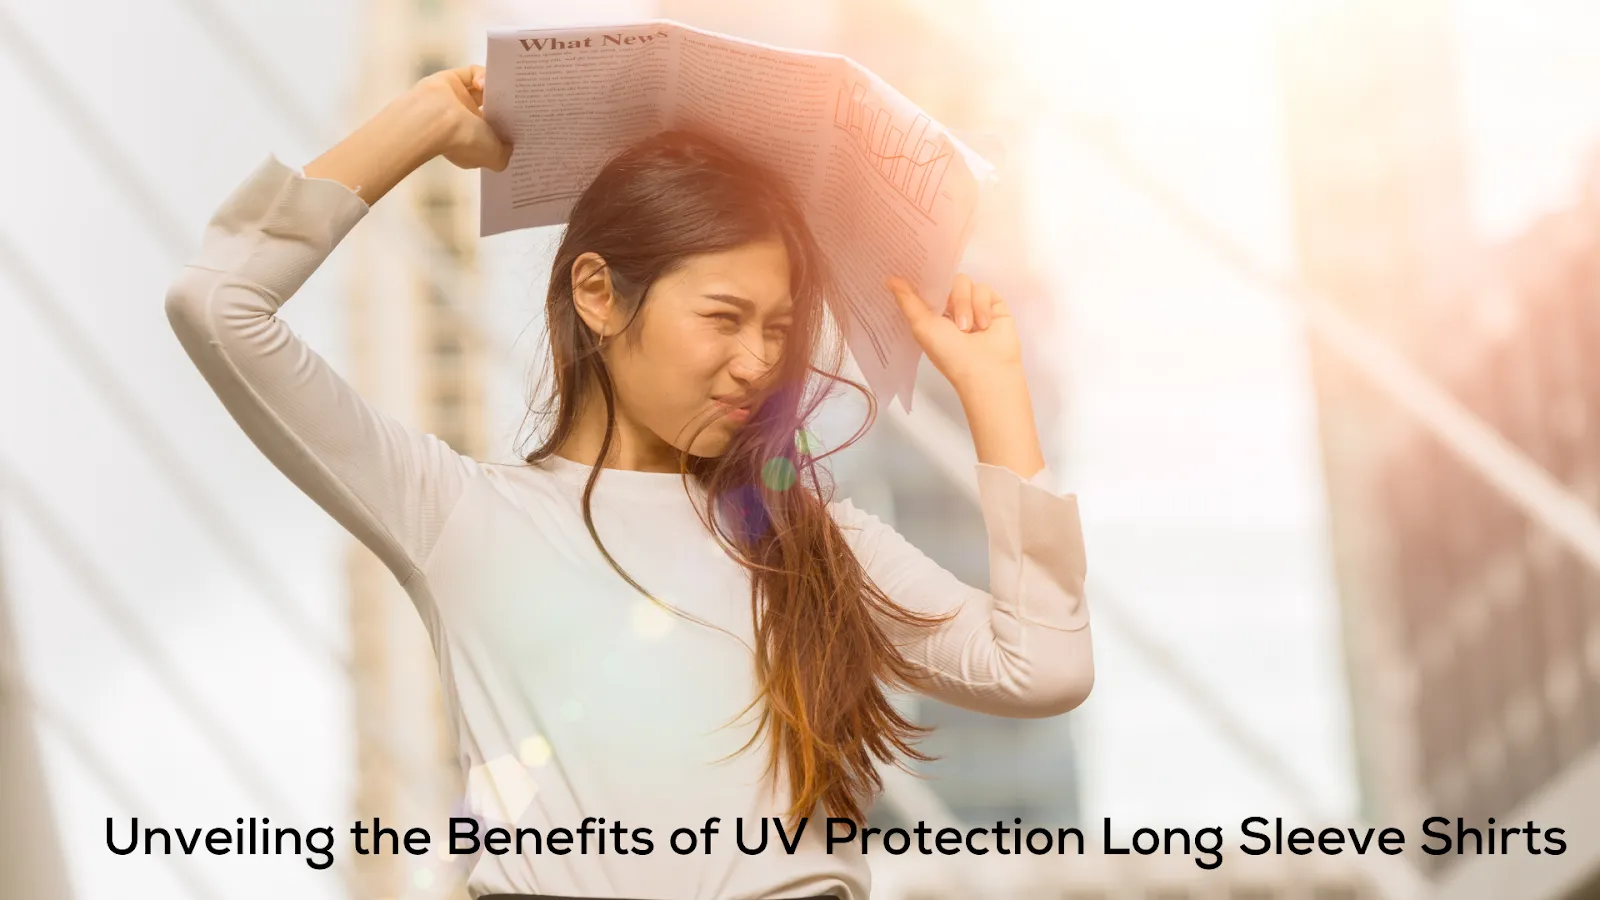 UV Protection Long Sleeve Shirts